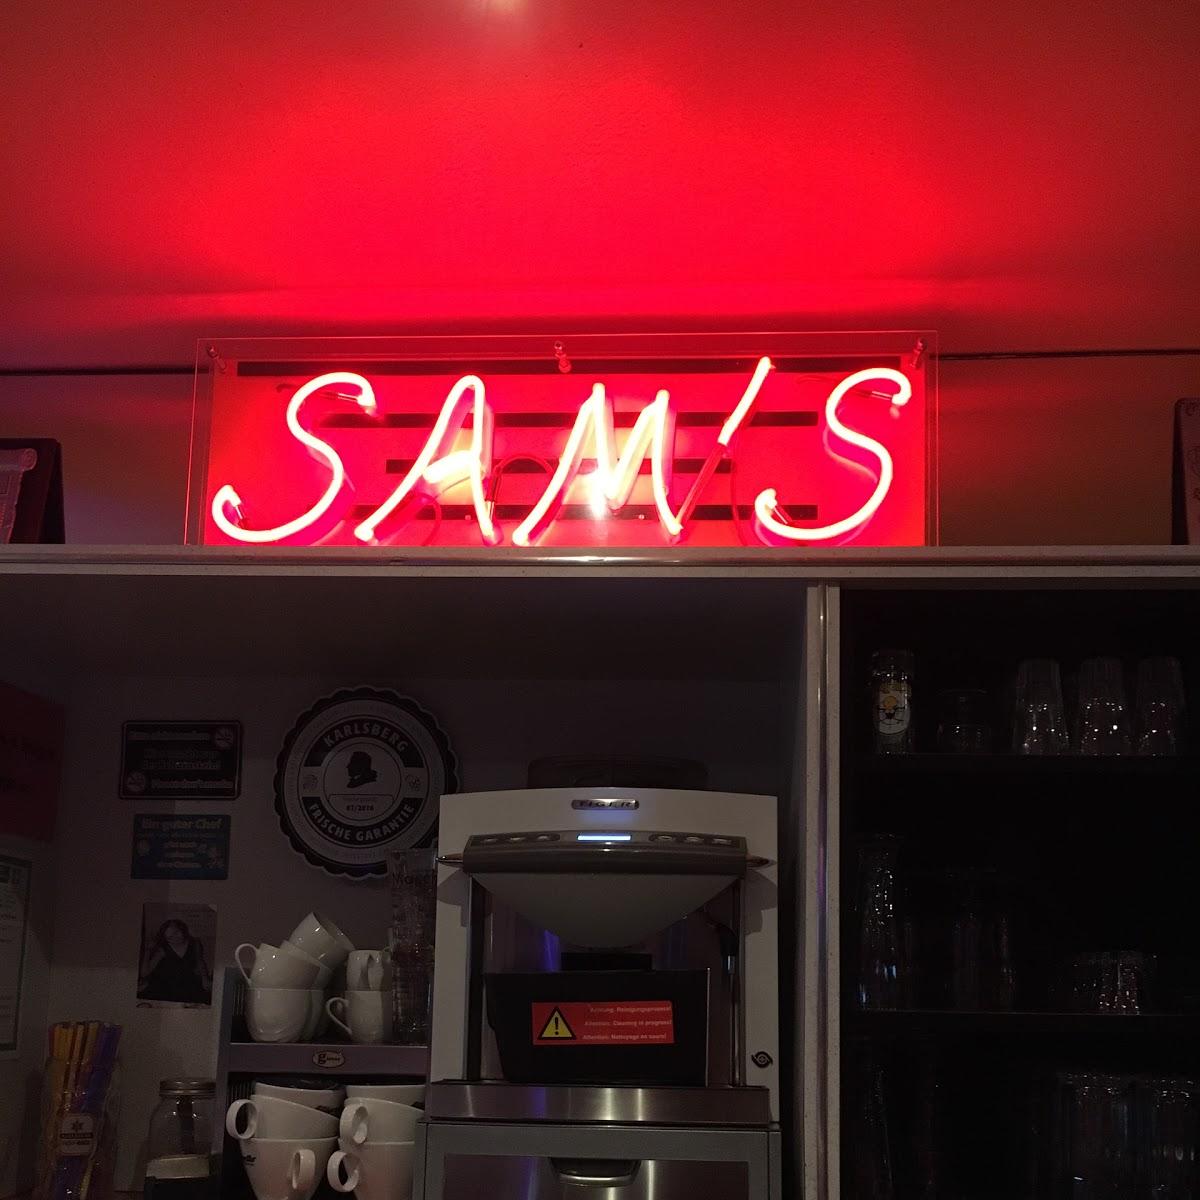 Restaurant "SAM